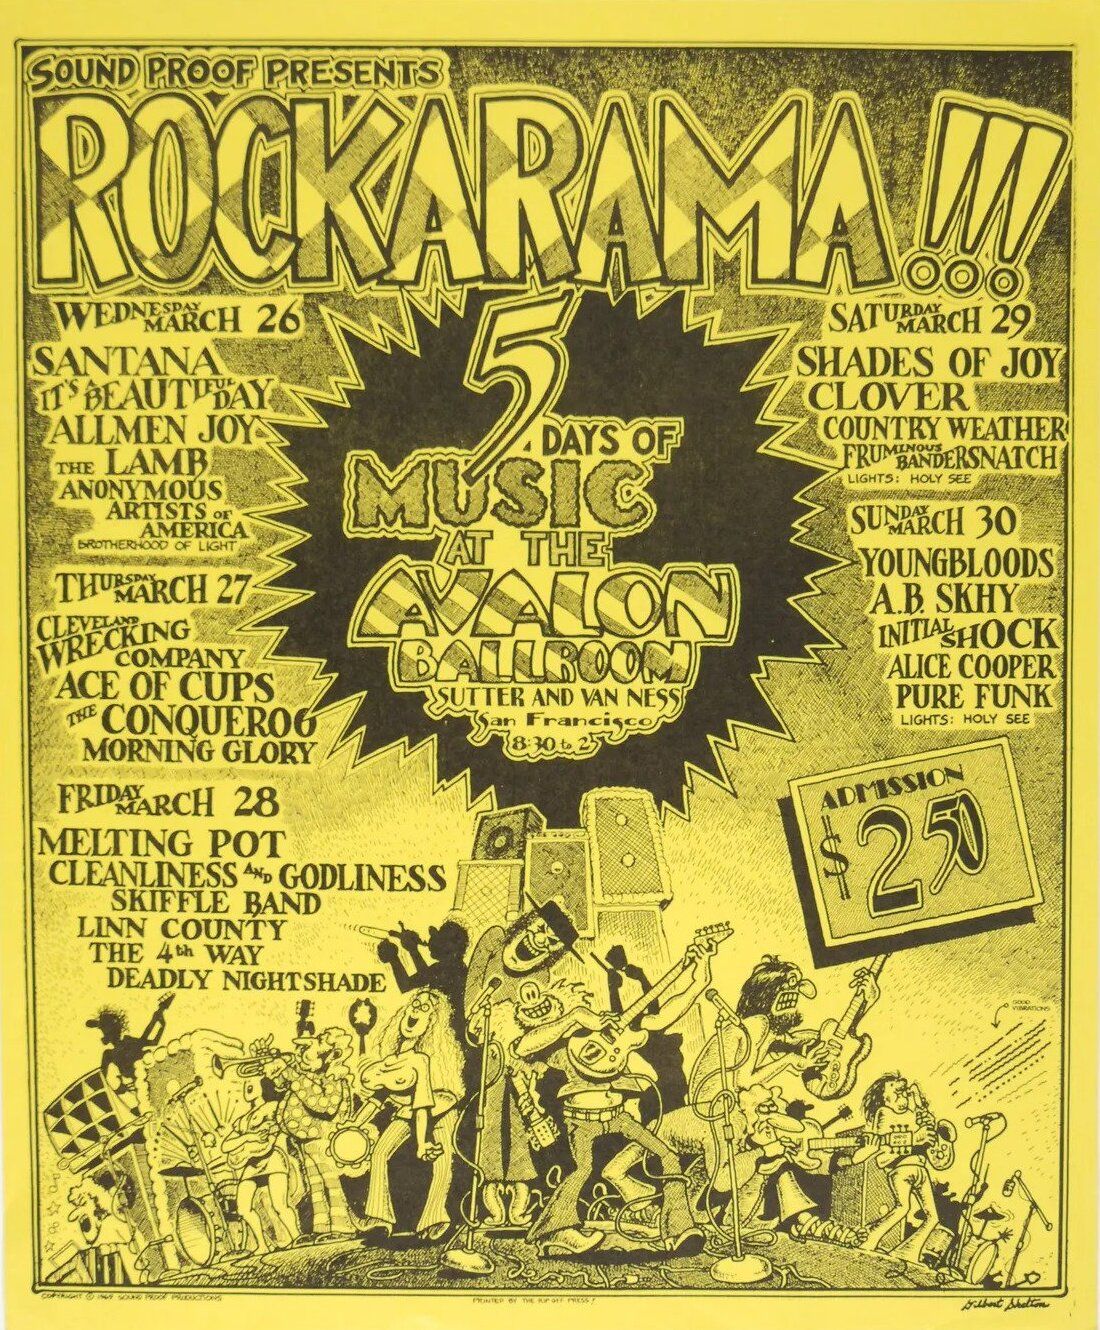 1969-Avalon Ballroom-Rockarama-Santana Concert Poster